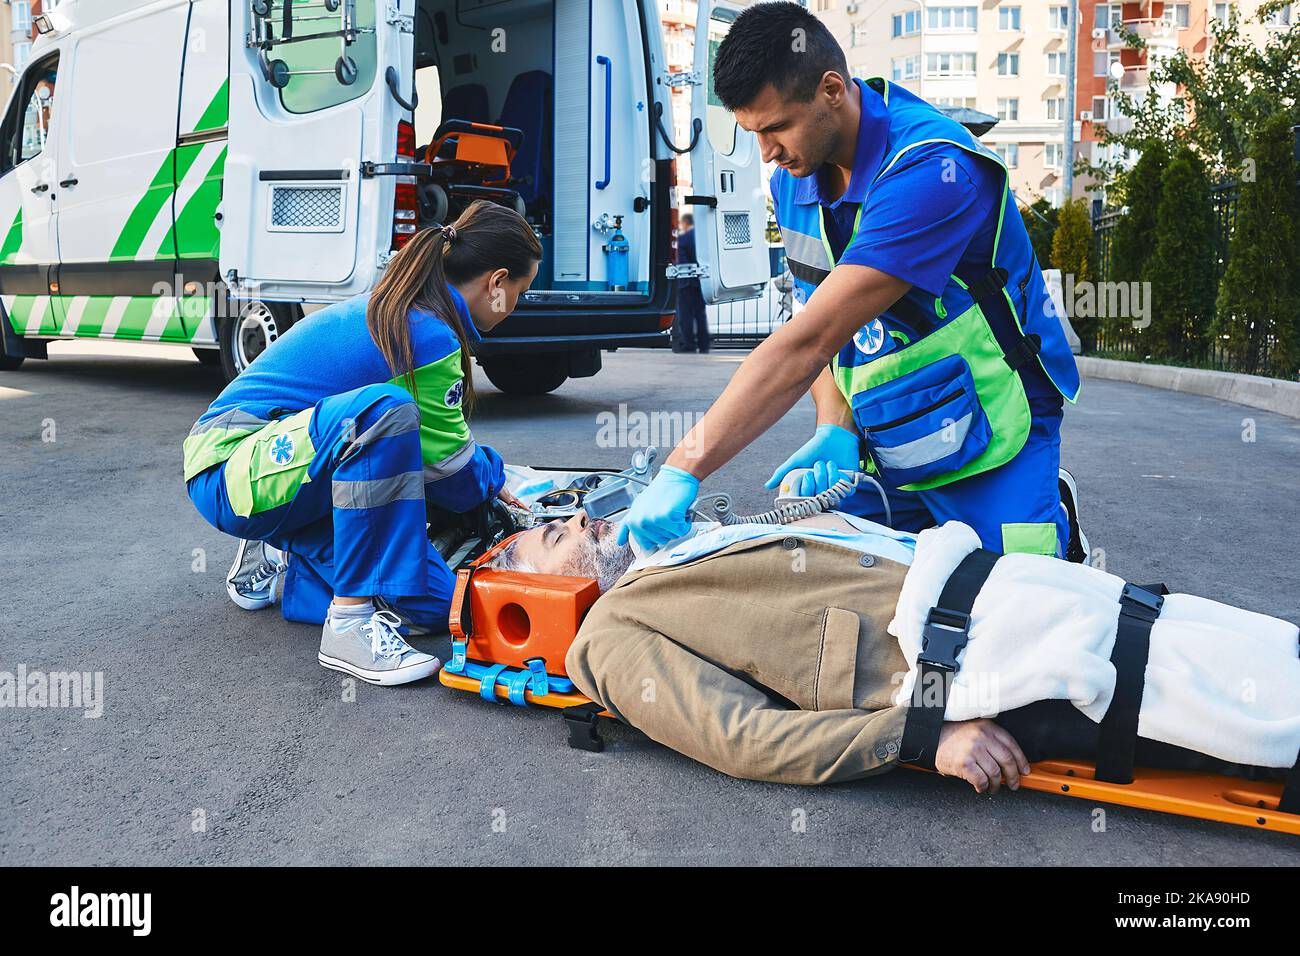 Ambulance paramedic with defibrillator performing cardiopulmonary resuscitation on cardiac patient lying on emergency stretcher Stock Photo